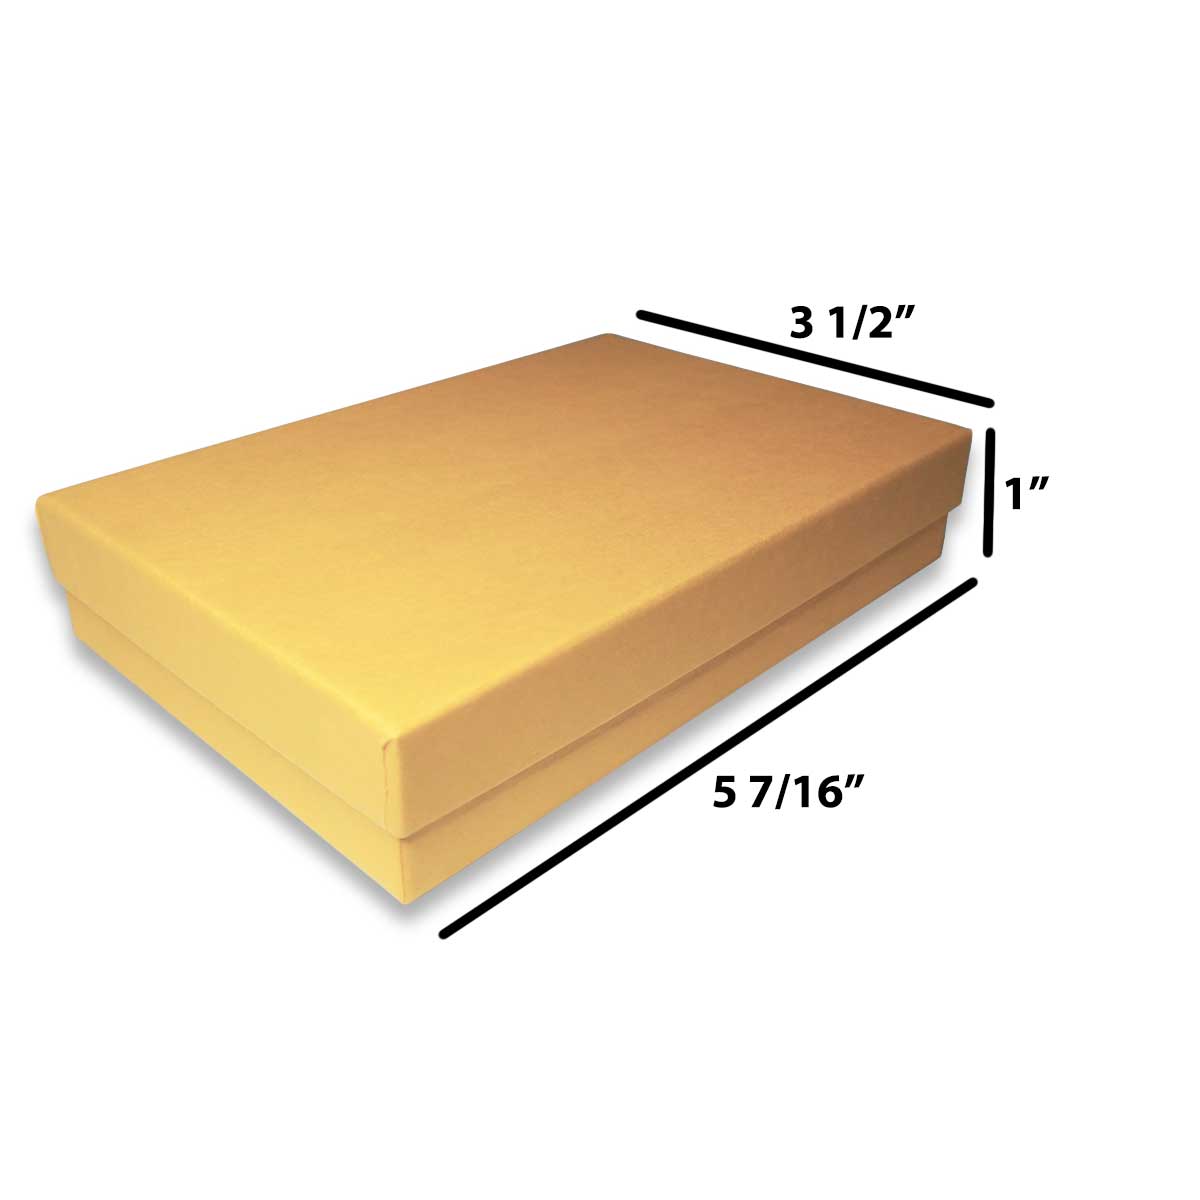 Yellow Kraft Cotton Filled Box 5 7/16" x 3 1/2" x 1"H